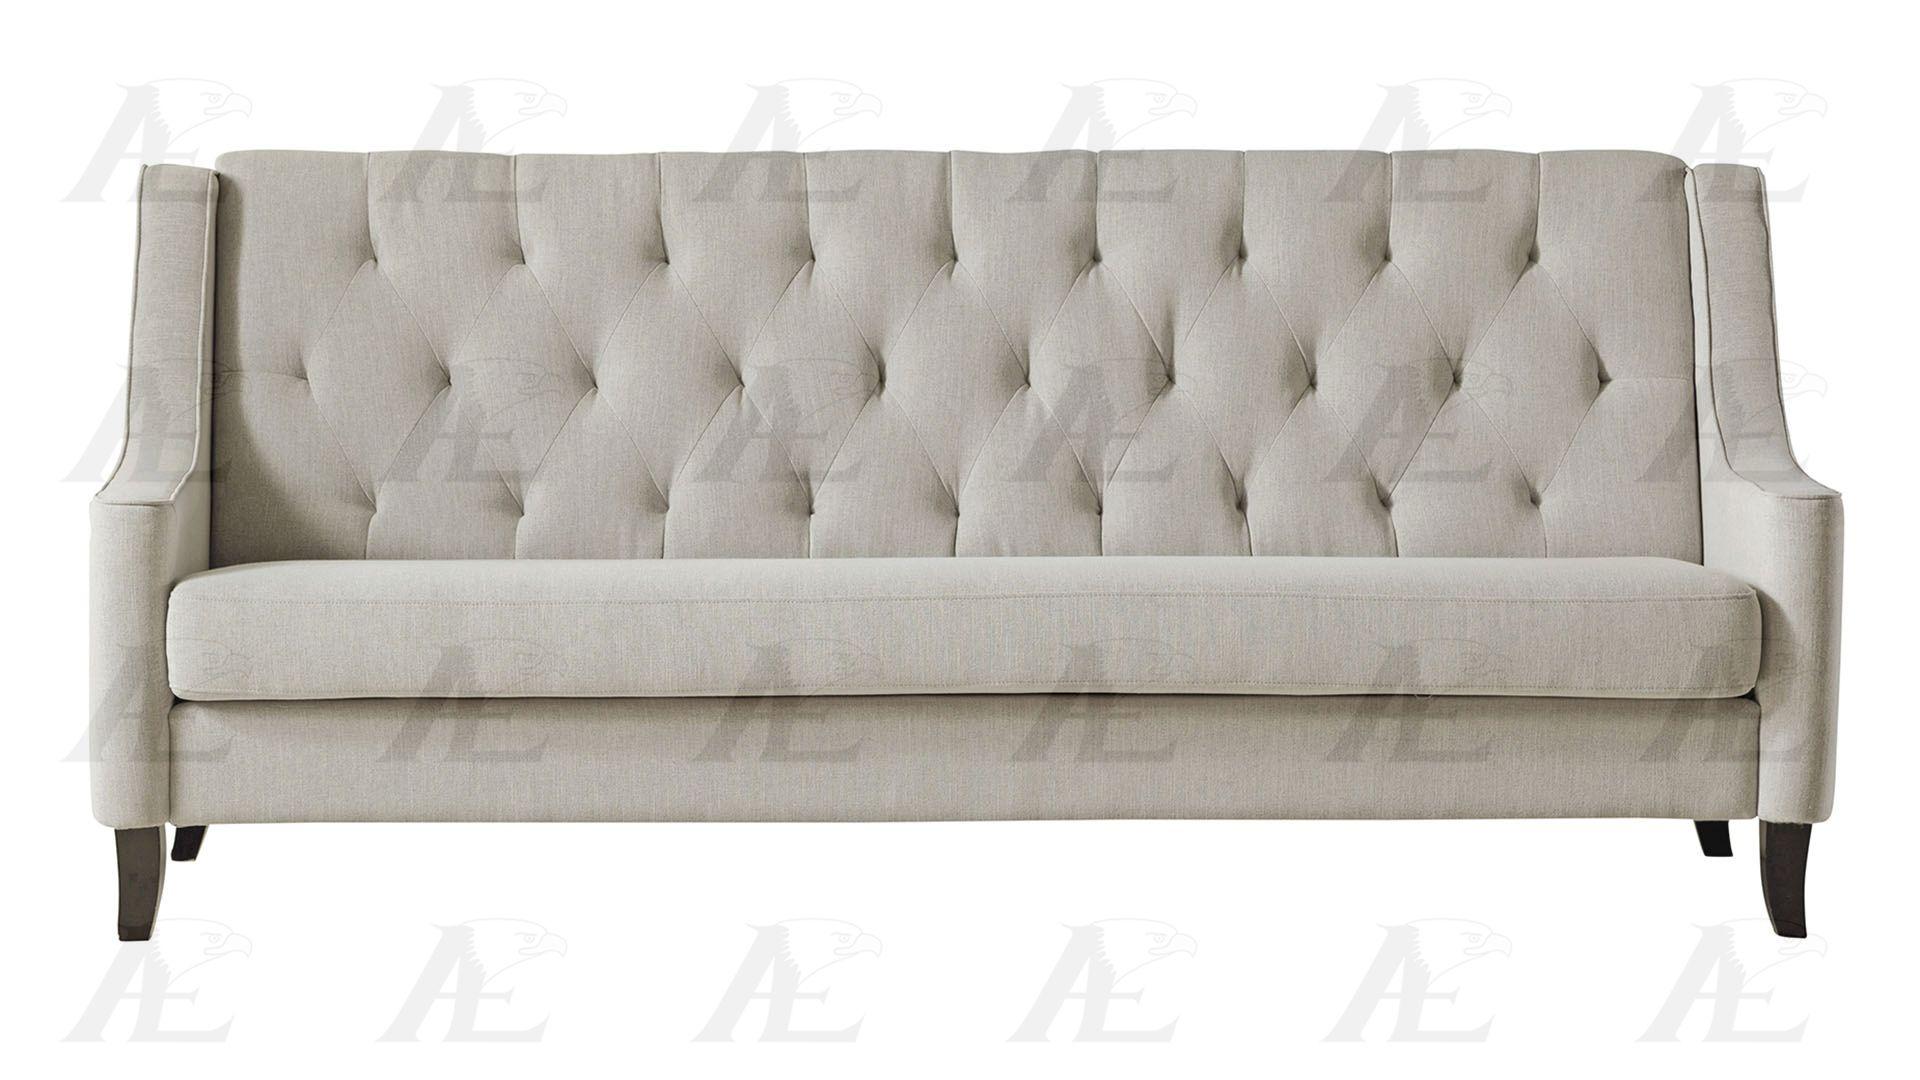 

    
American Eagle Furniture AE2372-LG Light Gray Fabric Tufted Sofa Contemporary Style
